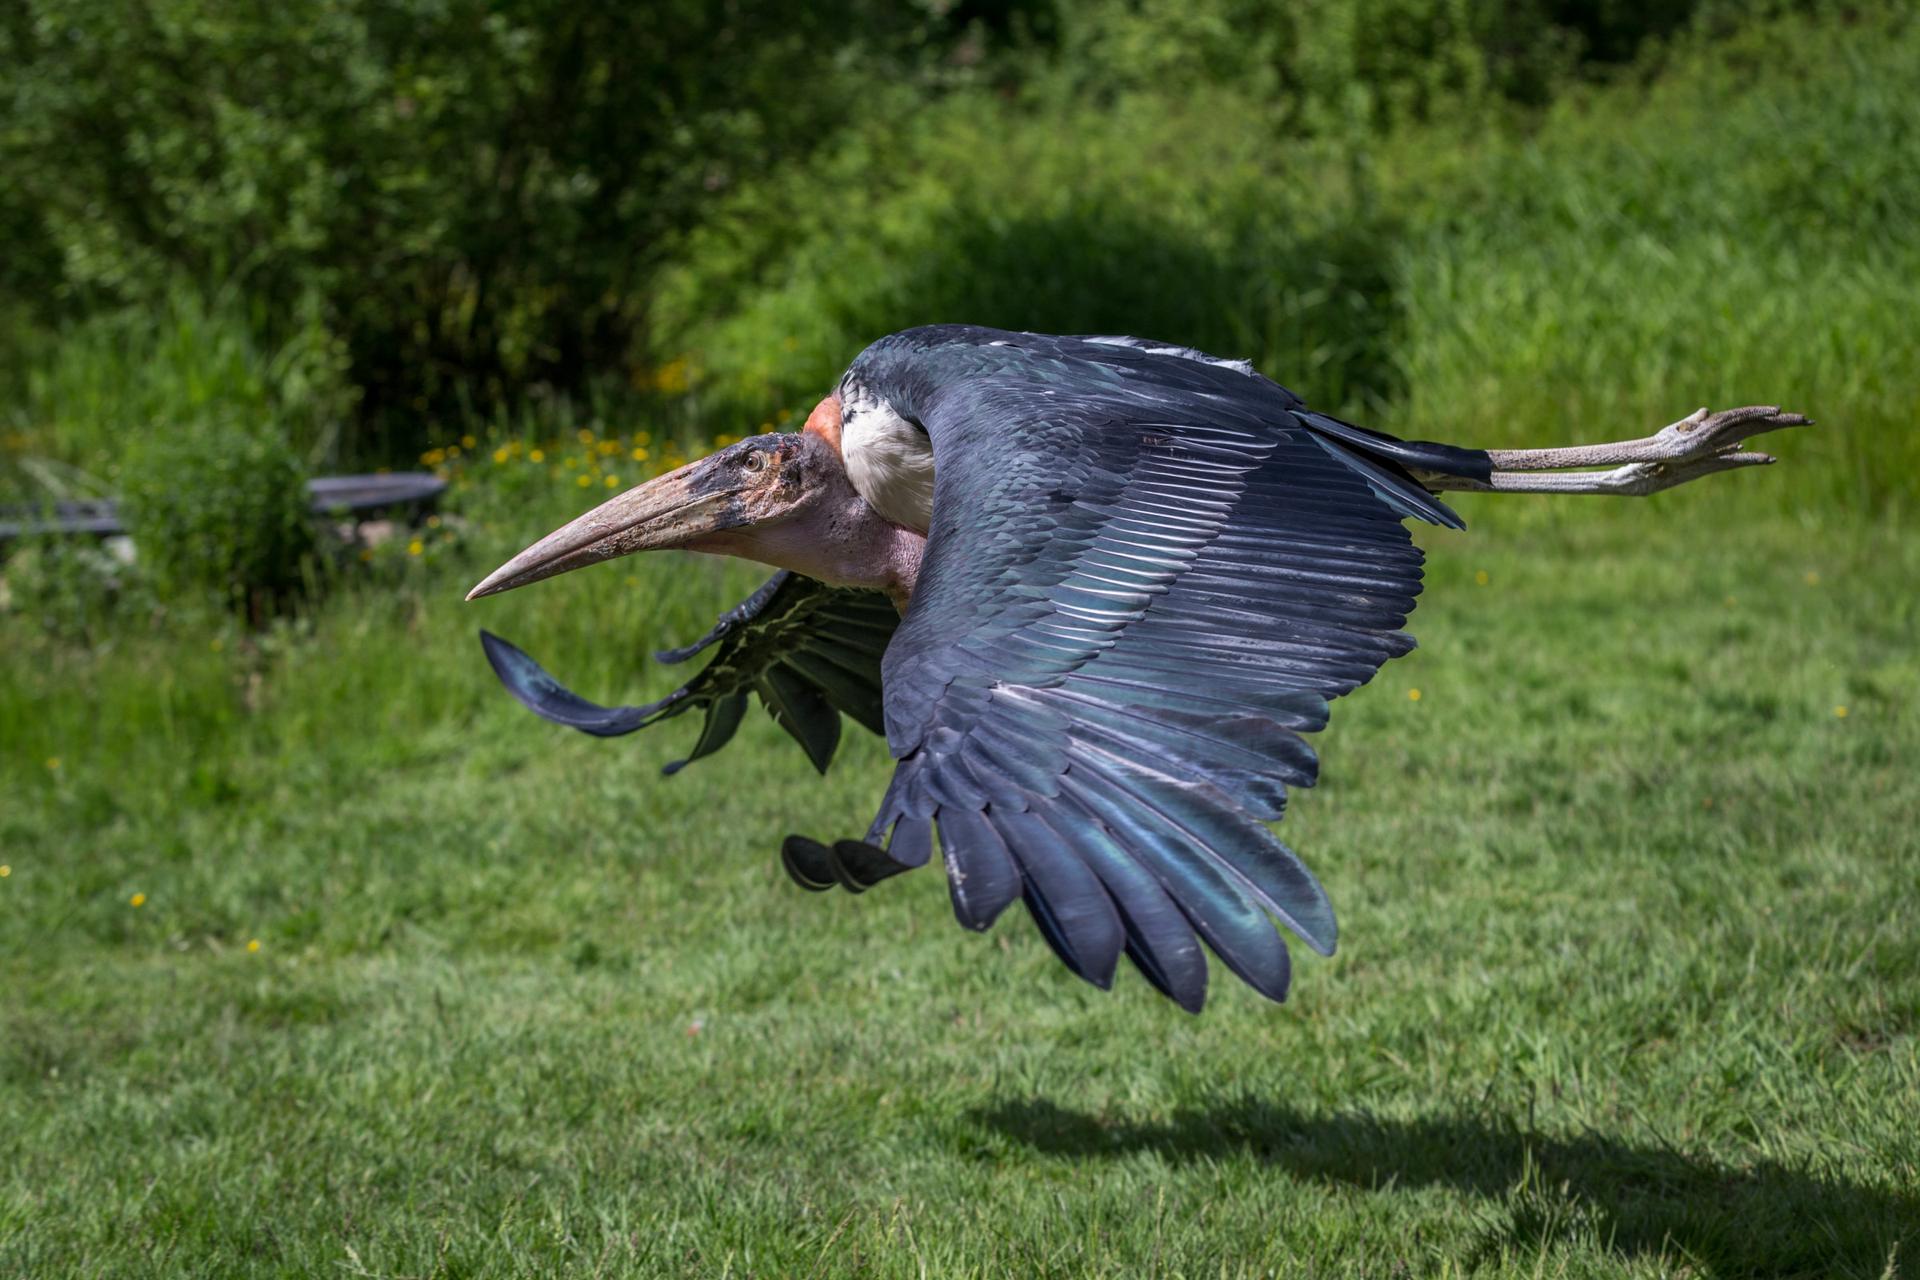 Get Closer to birds of prey at The Raptors.